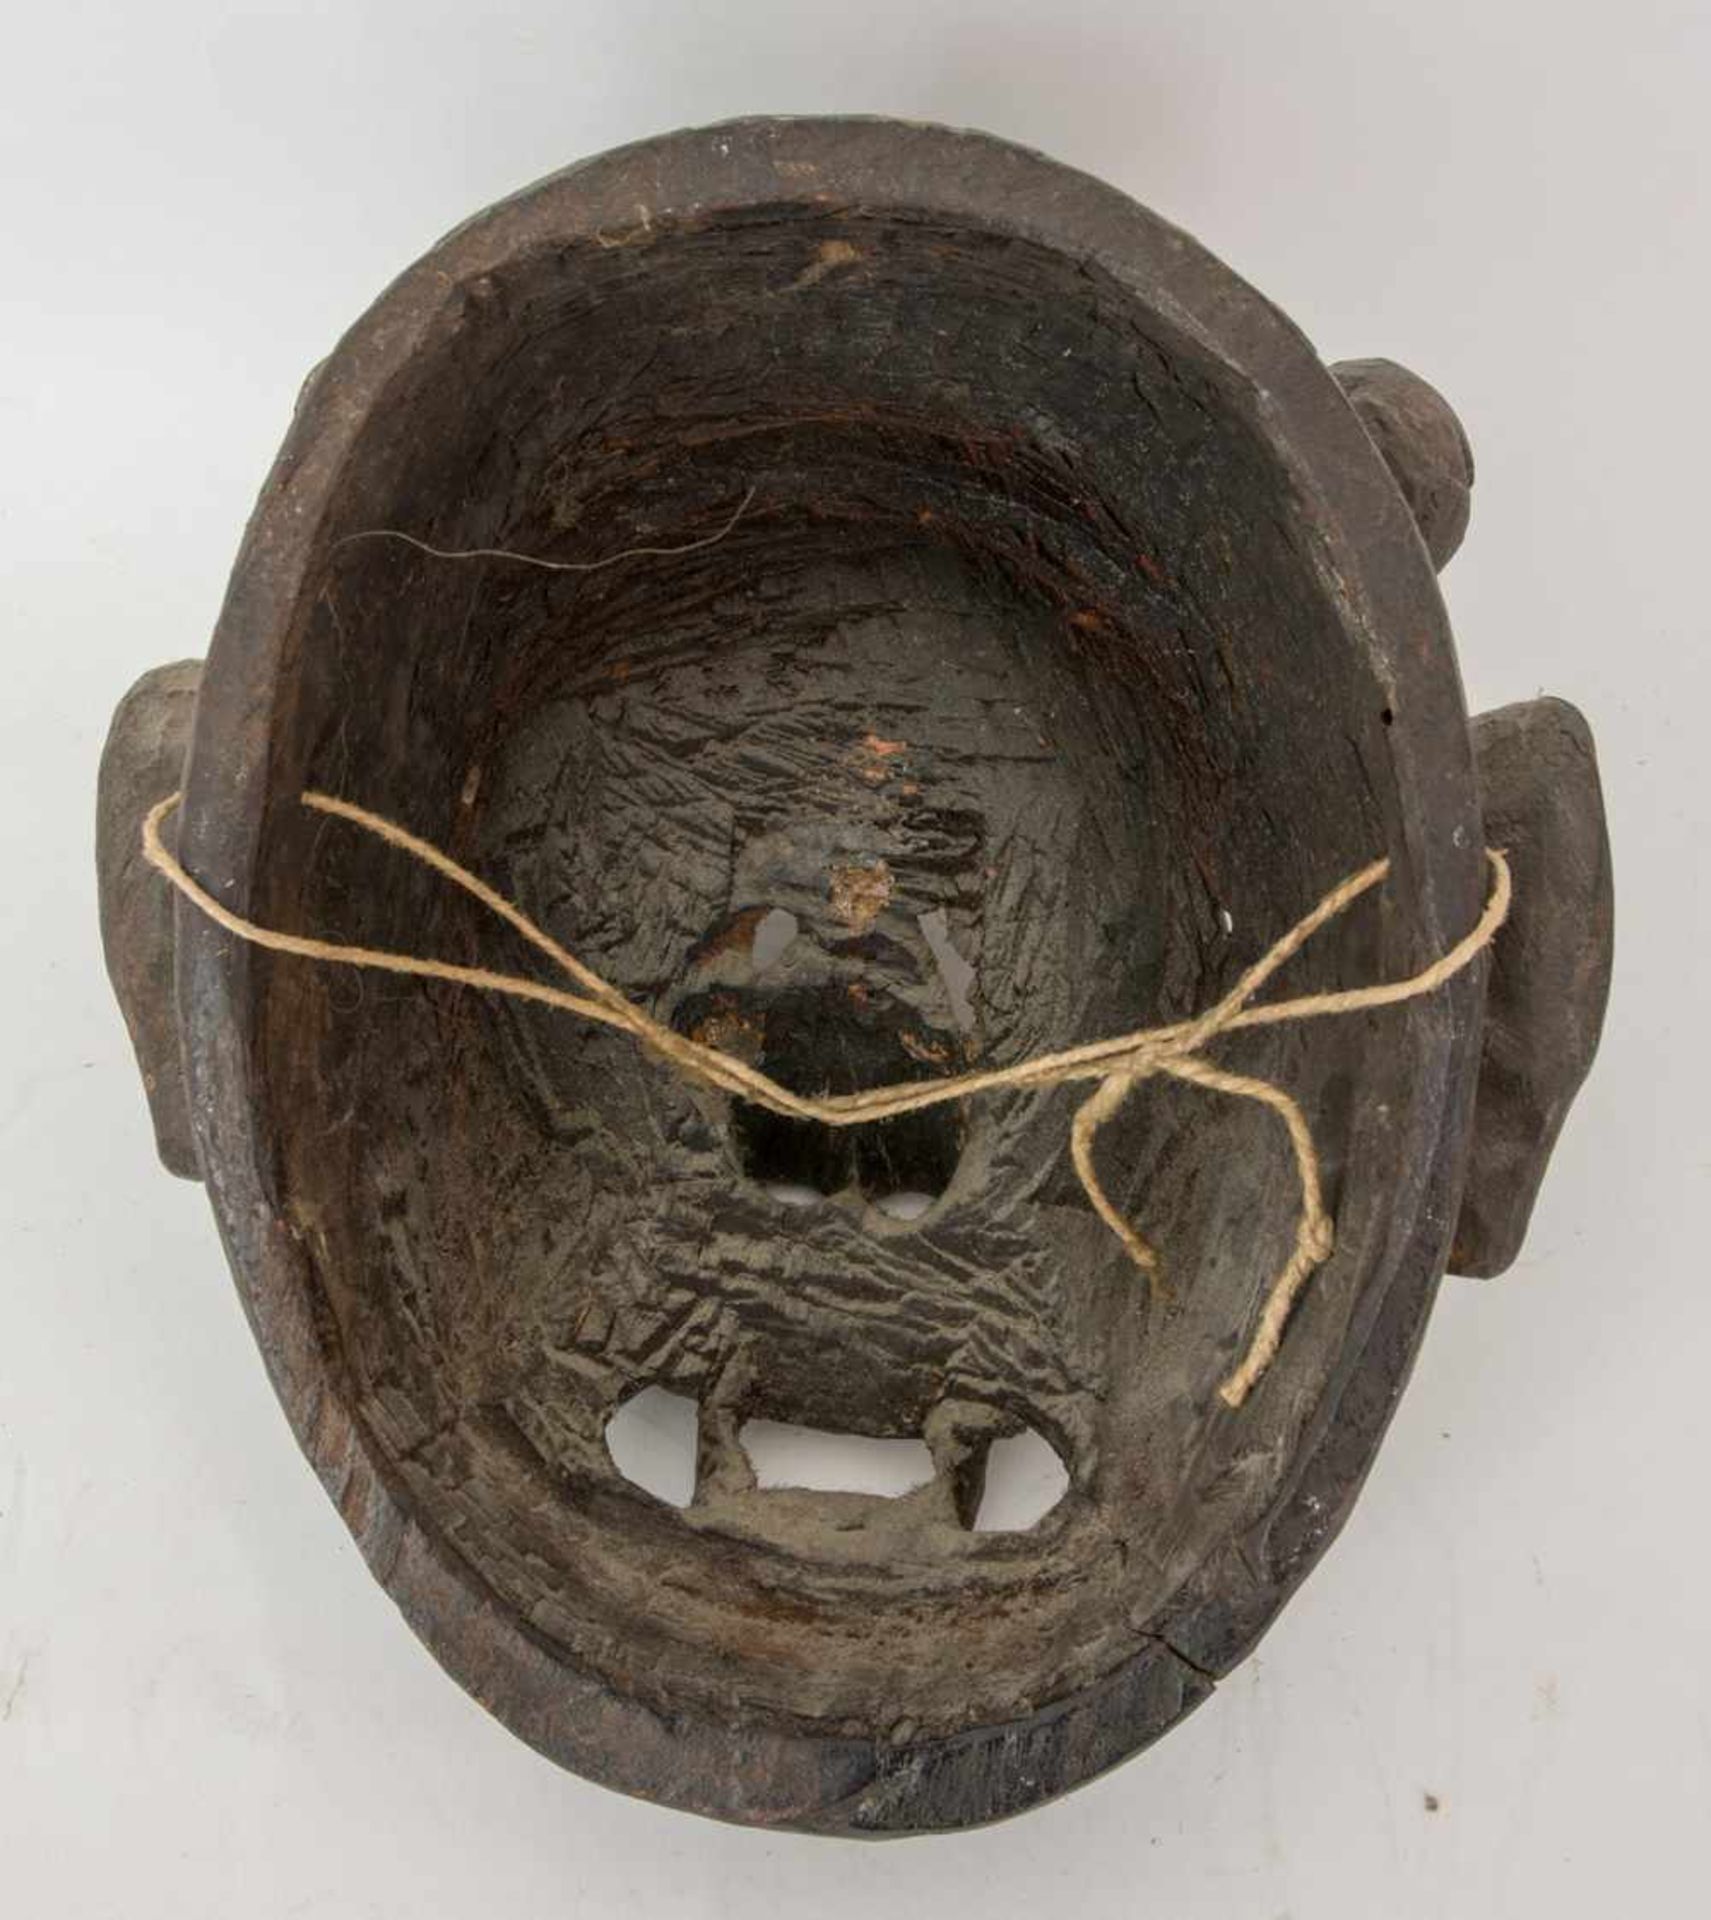 MASKE eines Dämons, beschnitztes Holz, Nepal 19. Jahrhundert Aus Holz geschnitzte Maske eines Dämons - Image 2 of 2